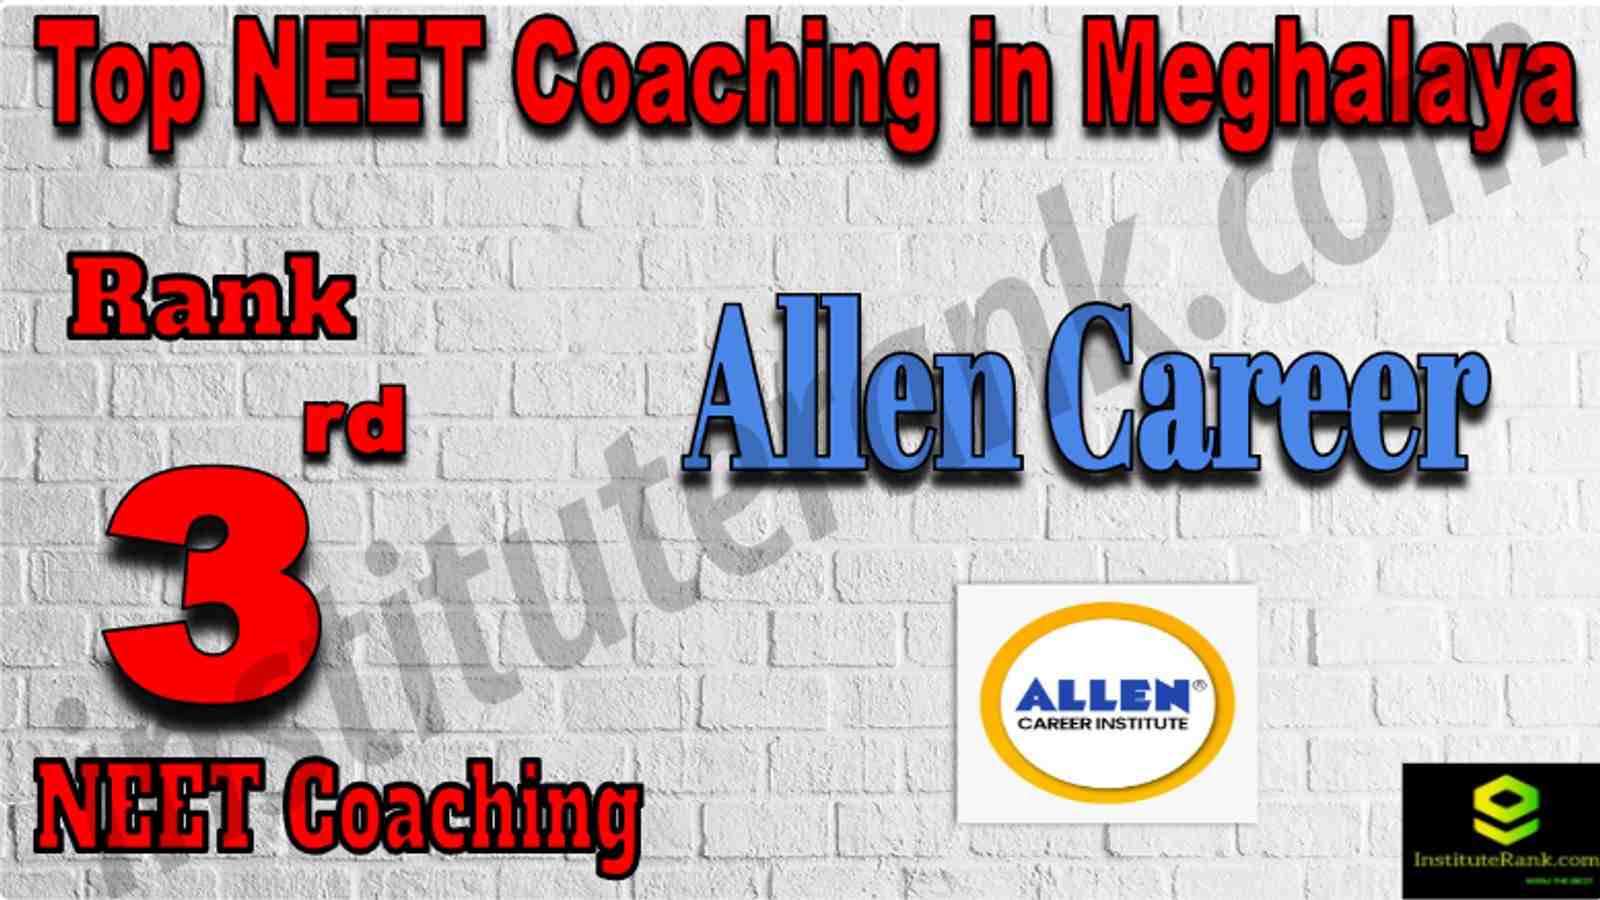 Rank 3 Top NEET Coaching in Meghalaya